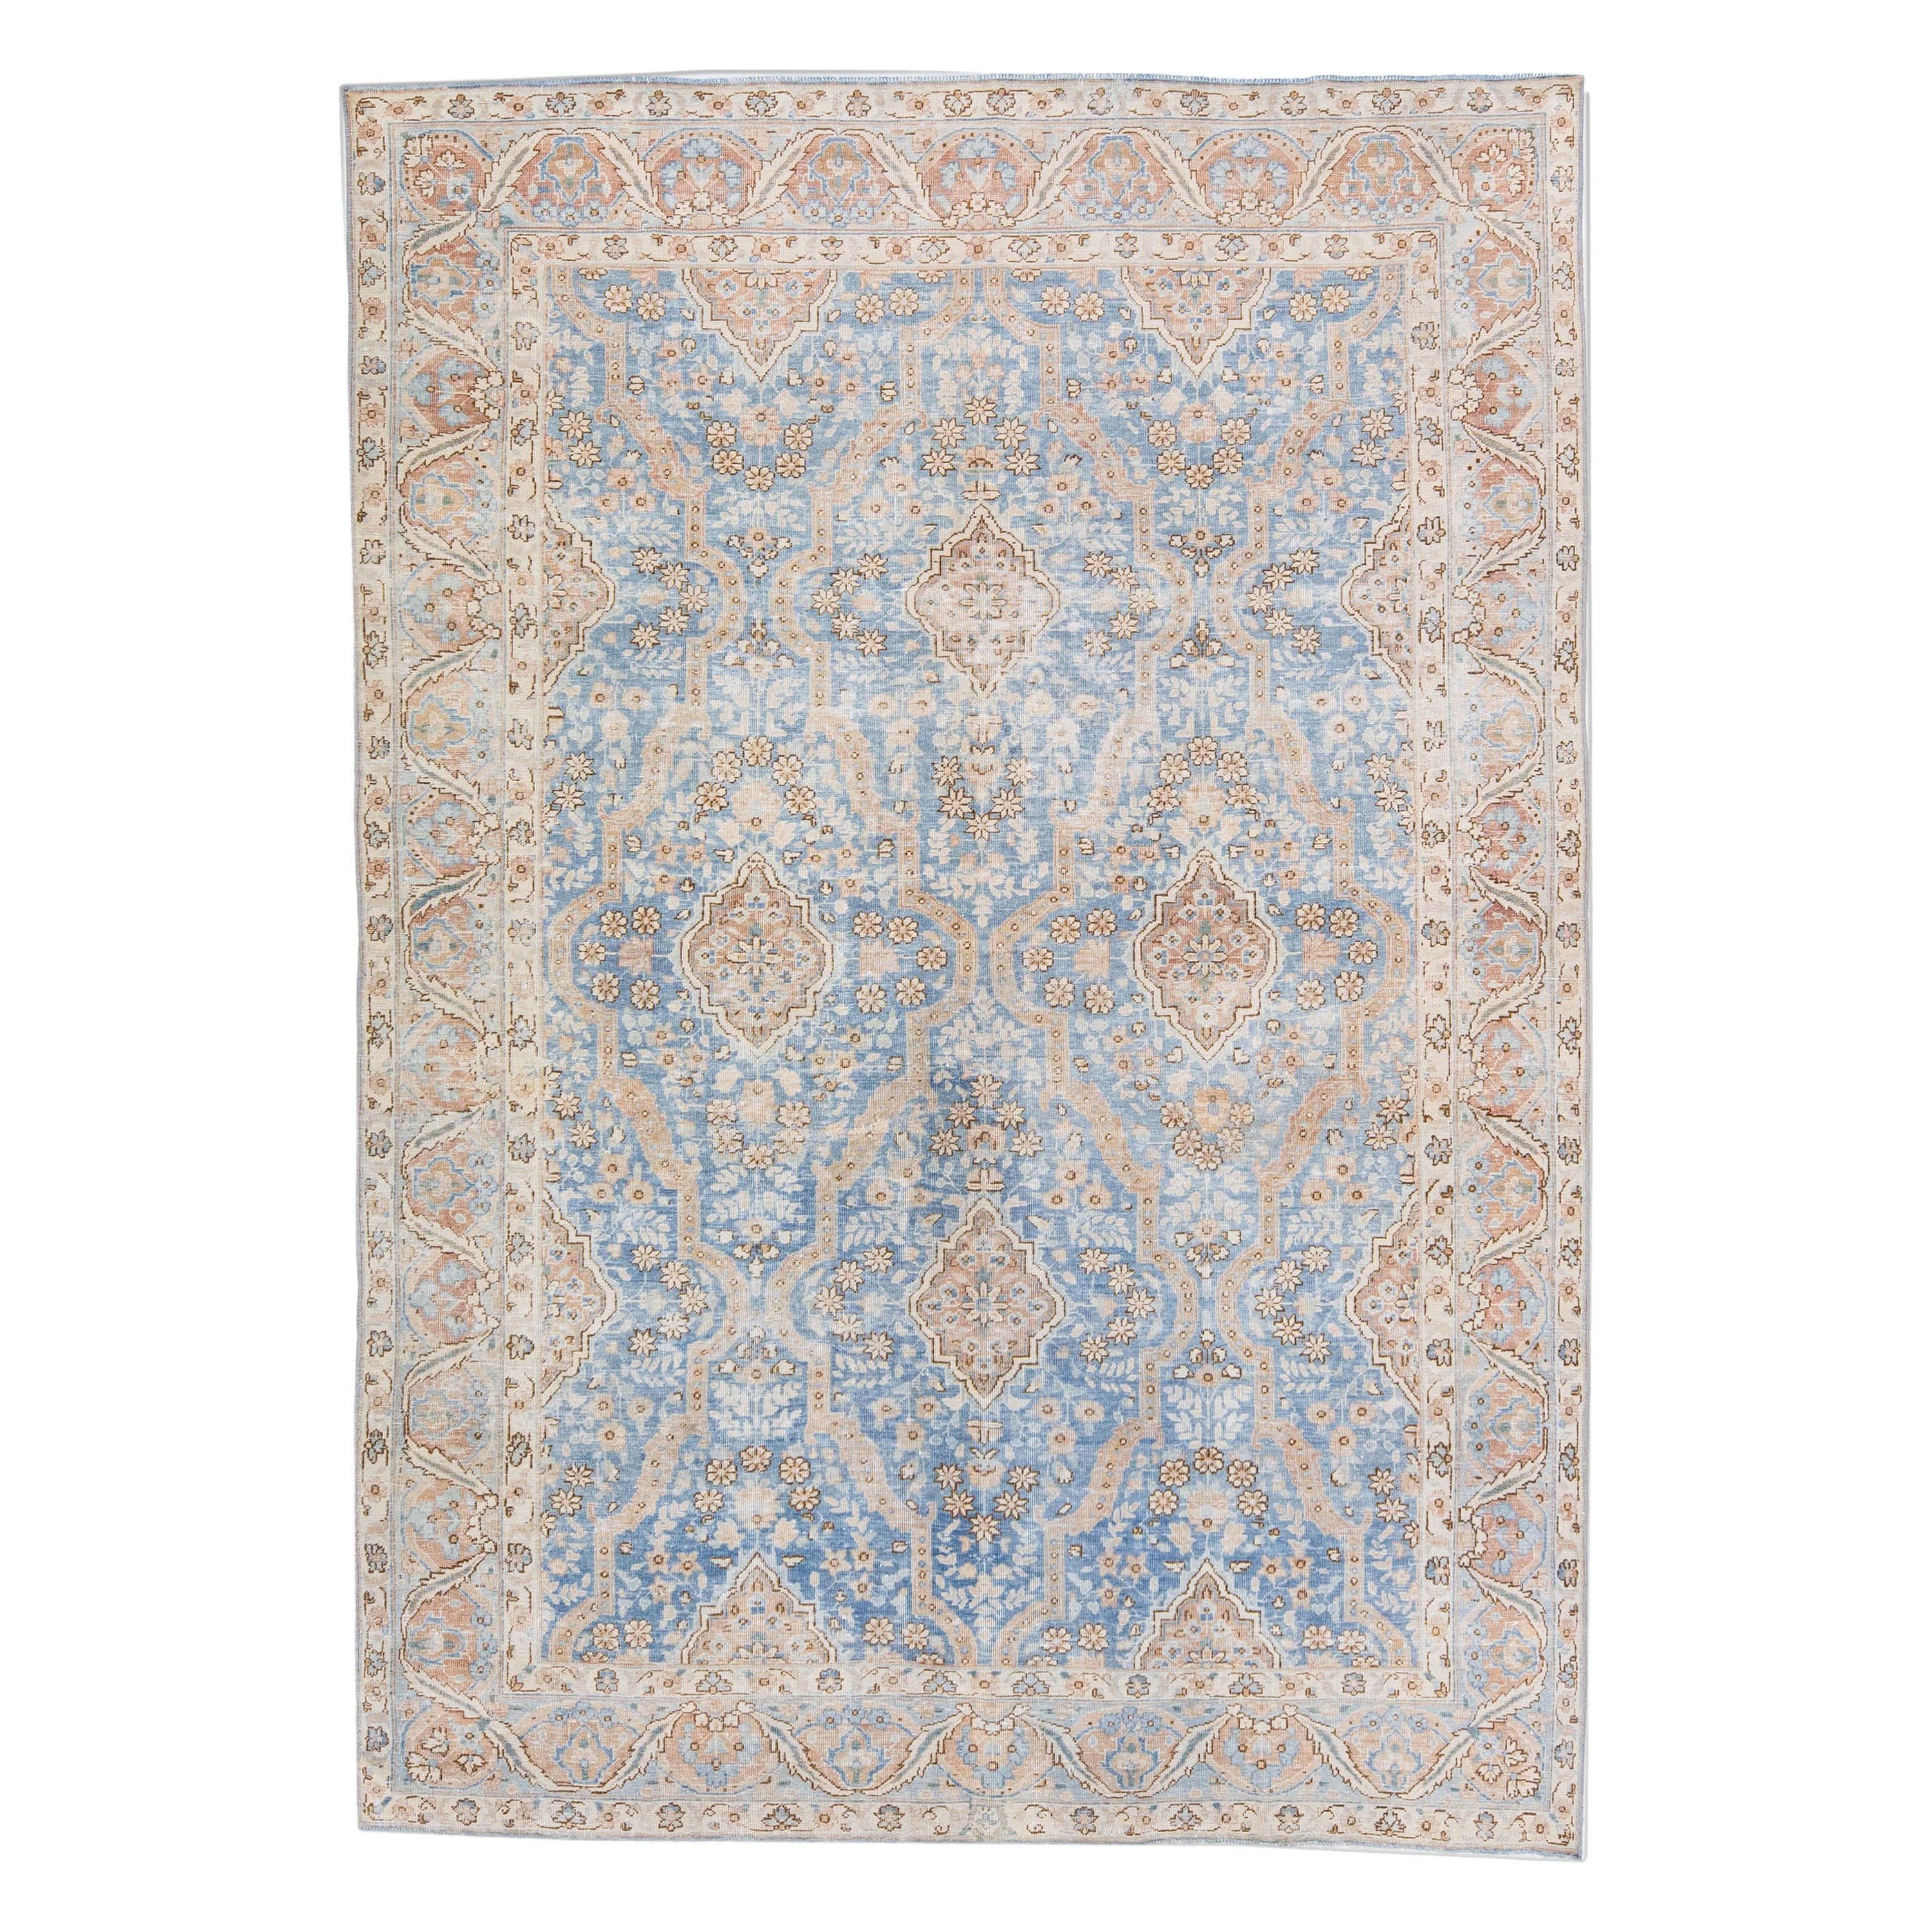 Antique Handmade Blue Persian Tabriz Wool Rug with Allover Motif